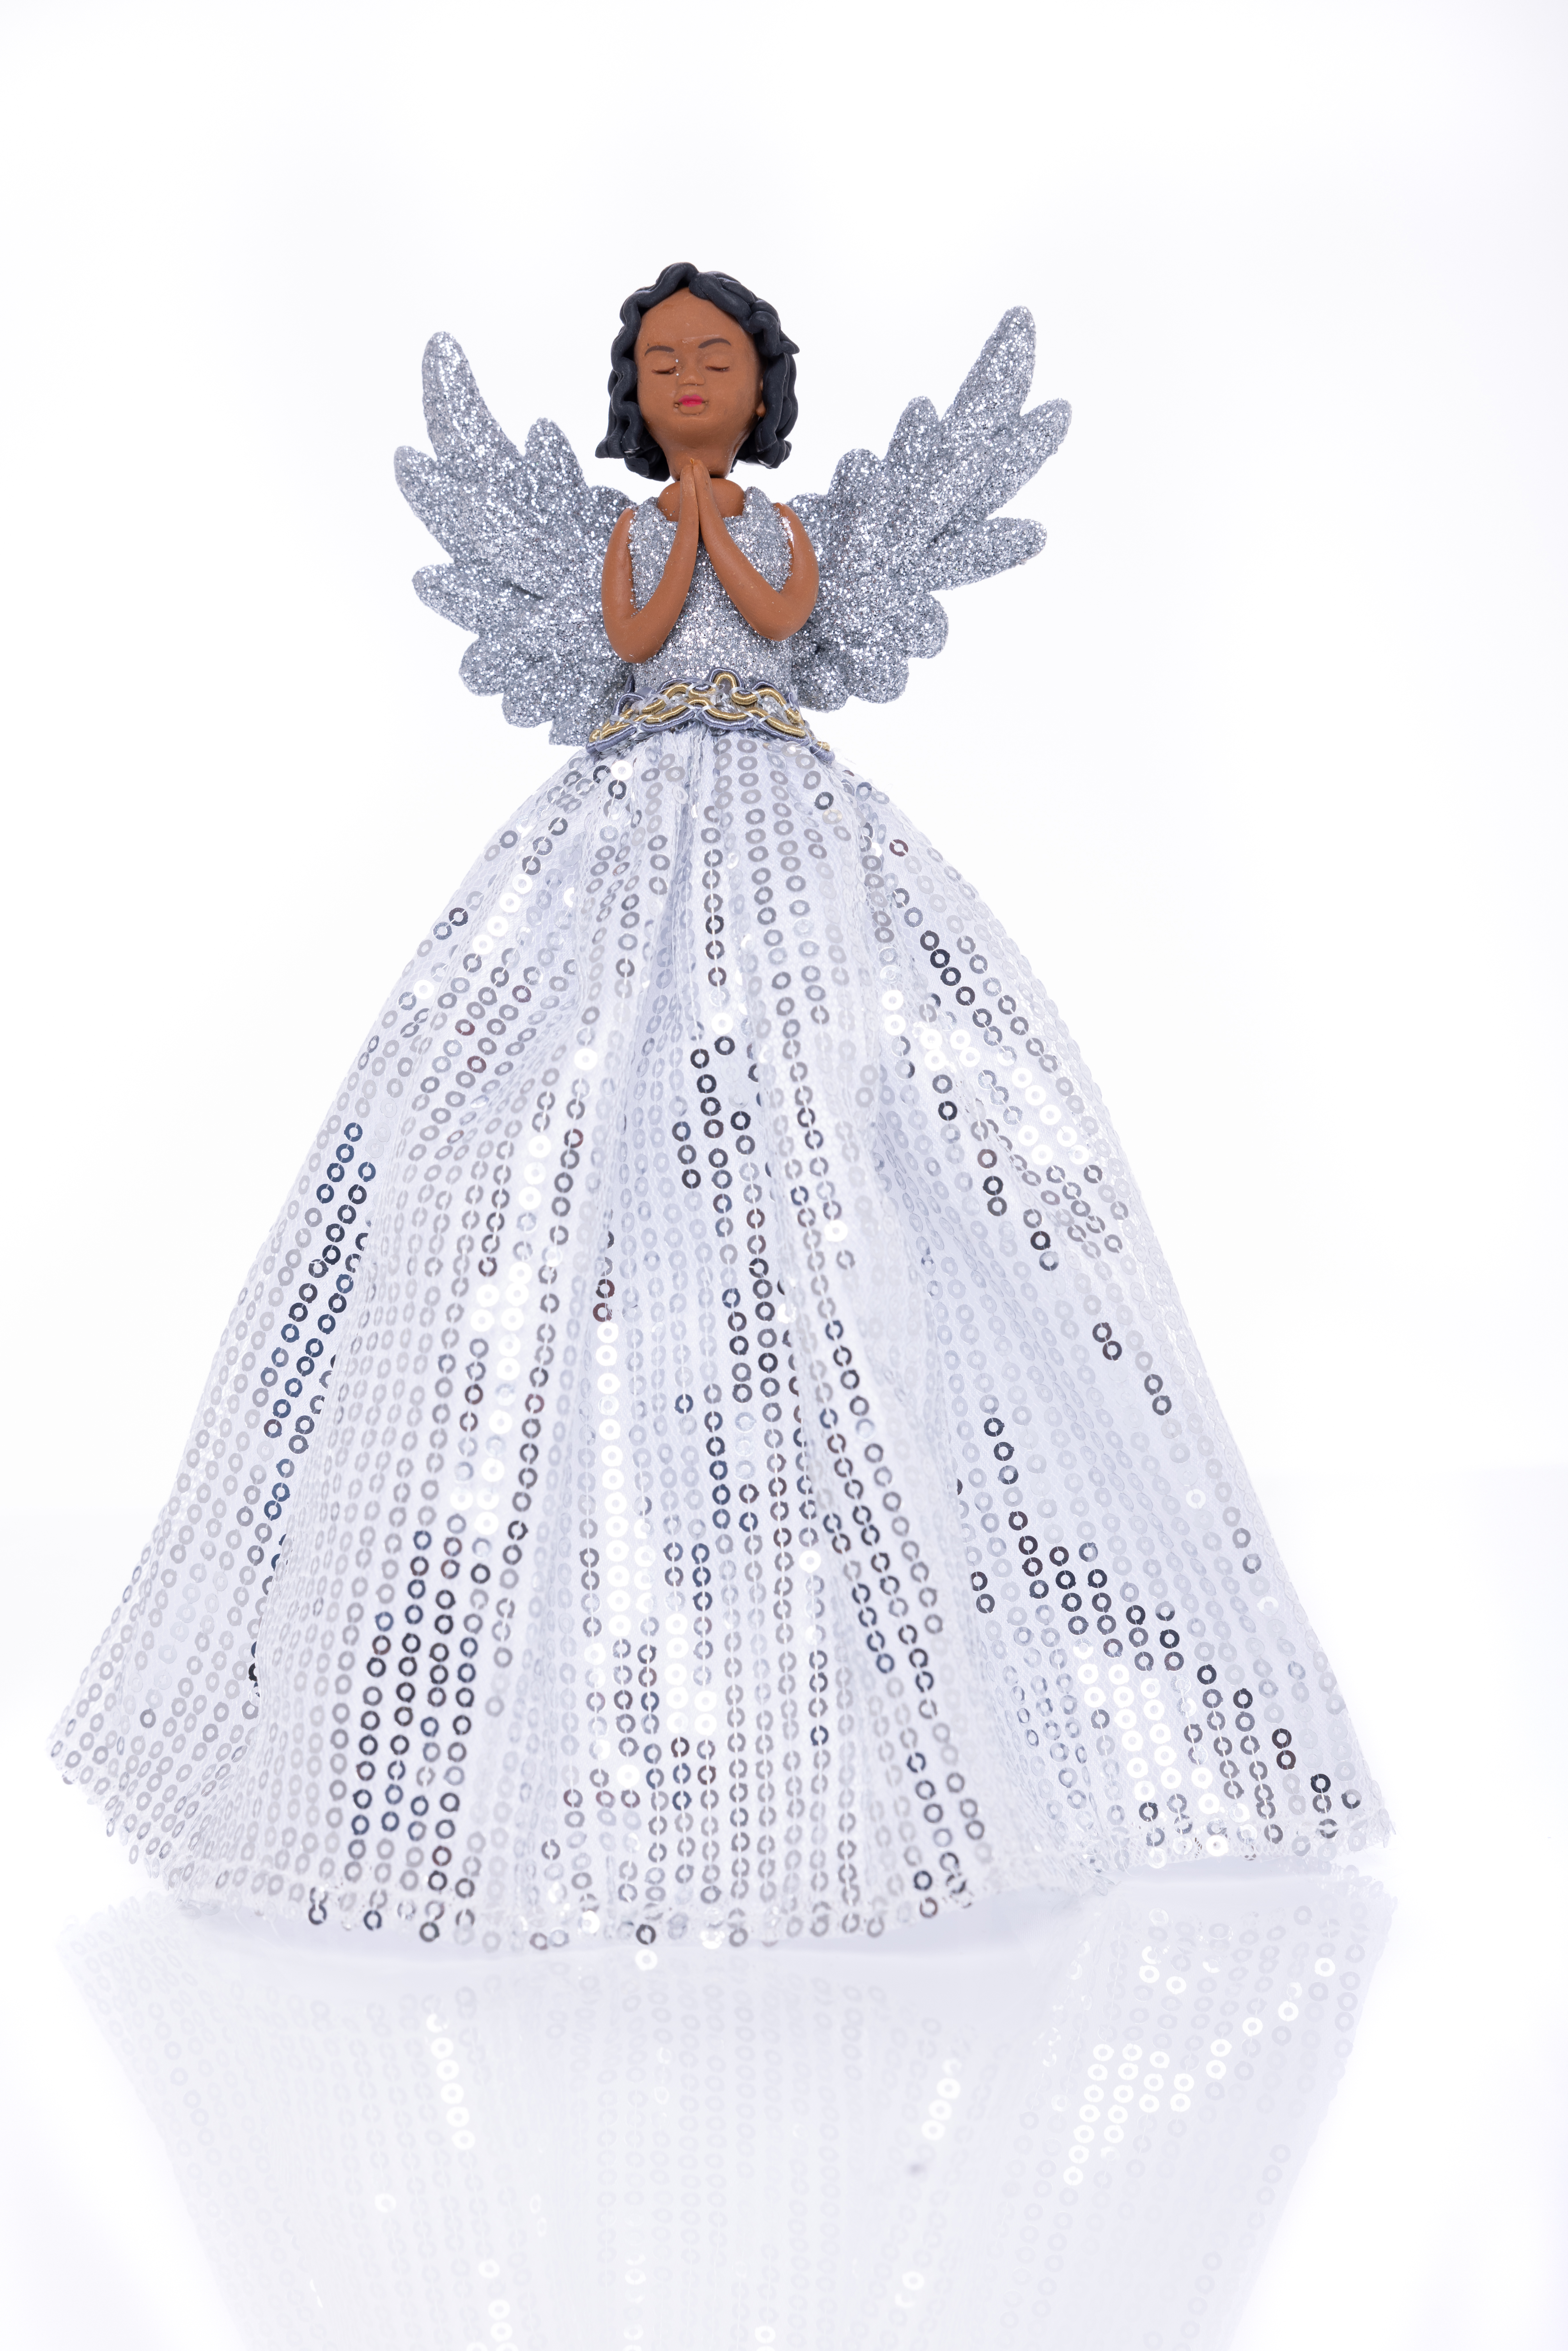 Angel wearing a white dress